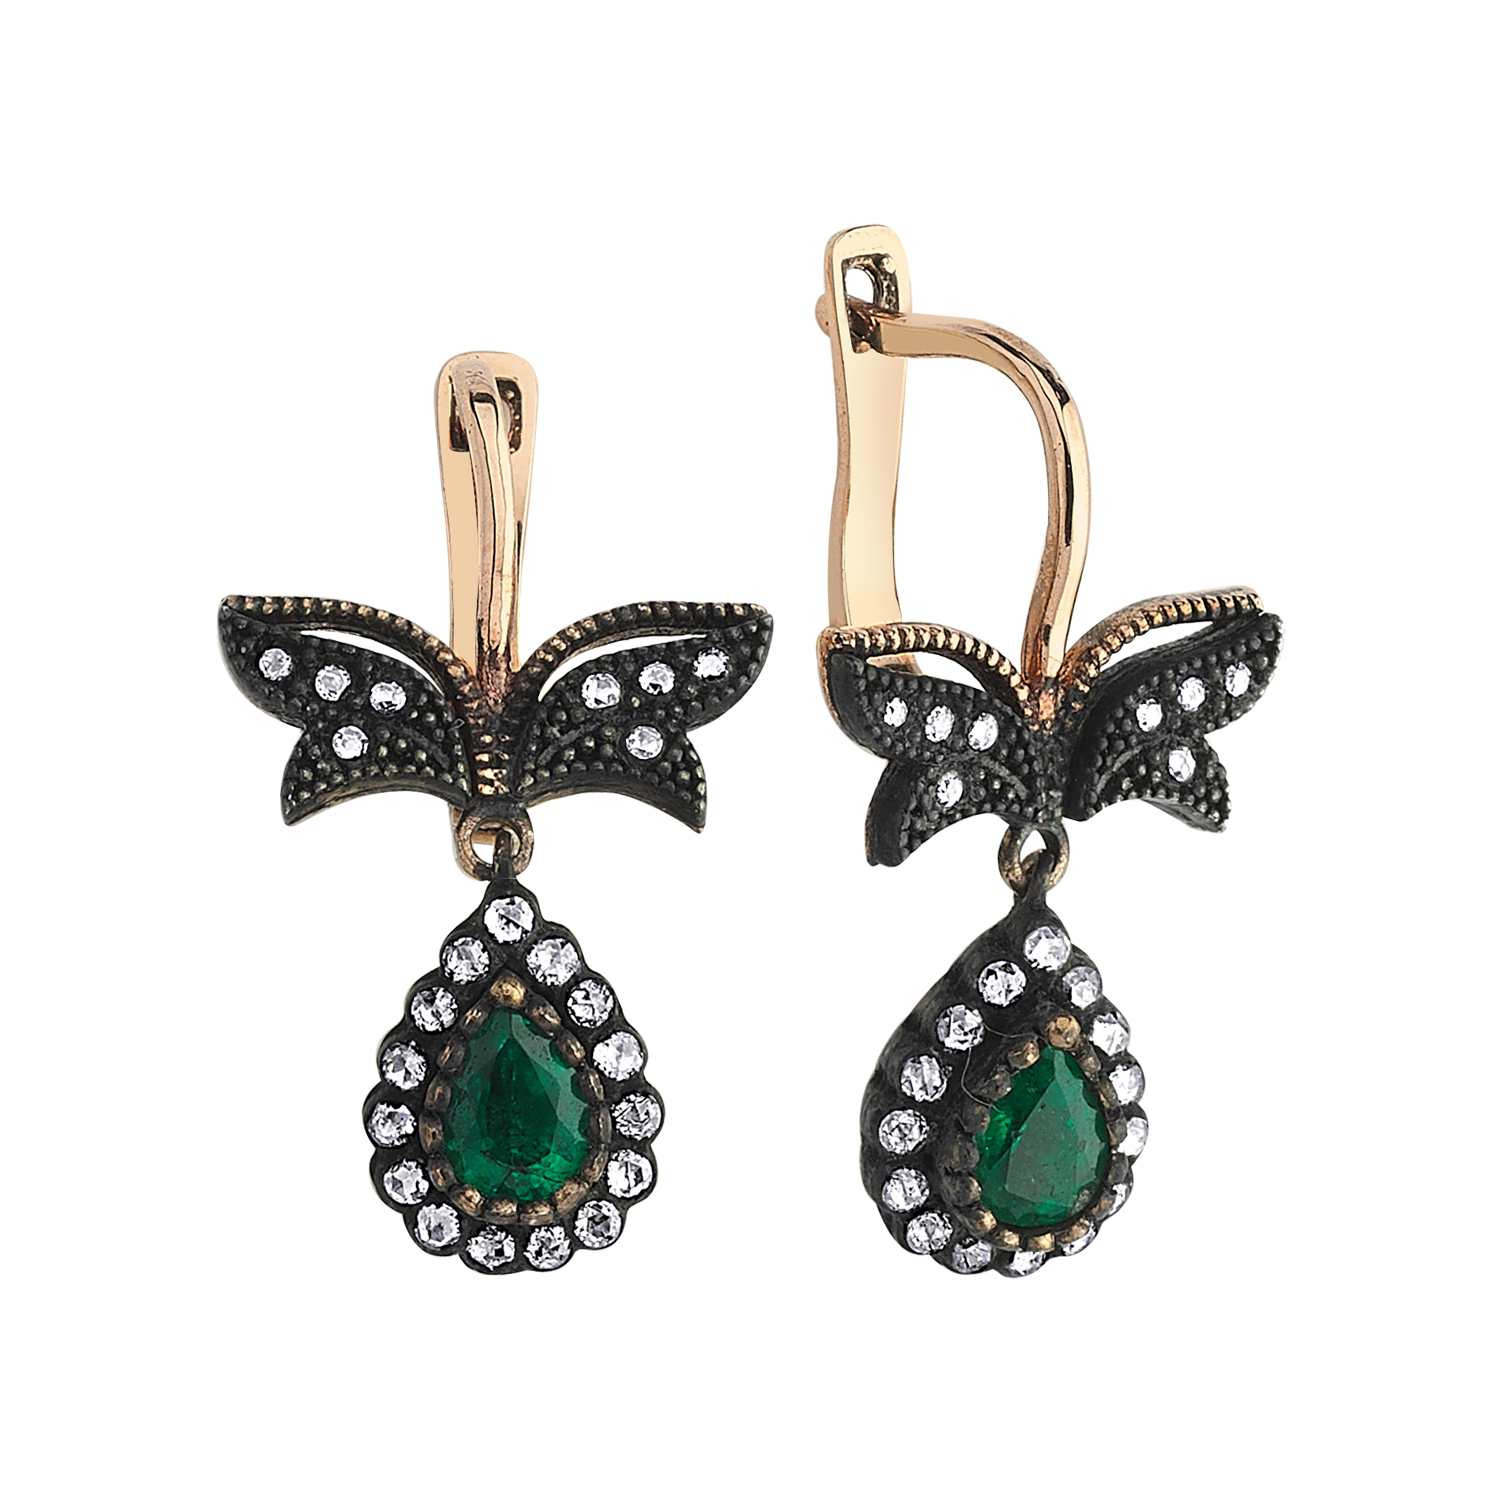 0.23 Carat Emerald Diamond Earrings